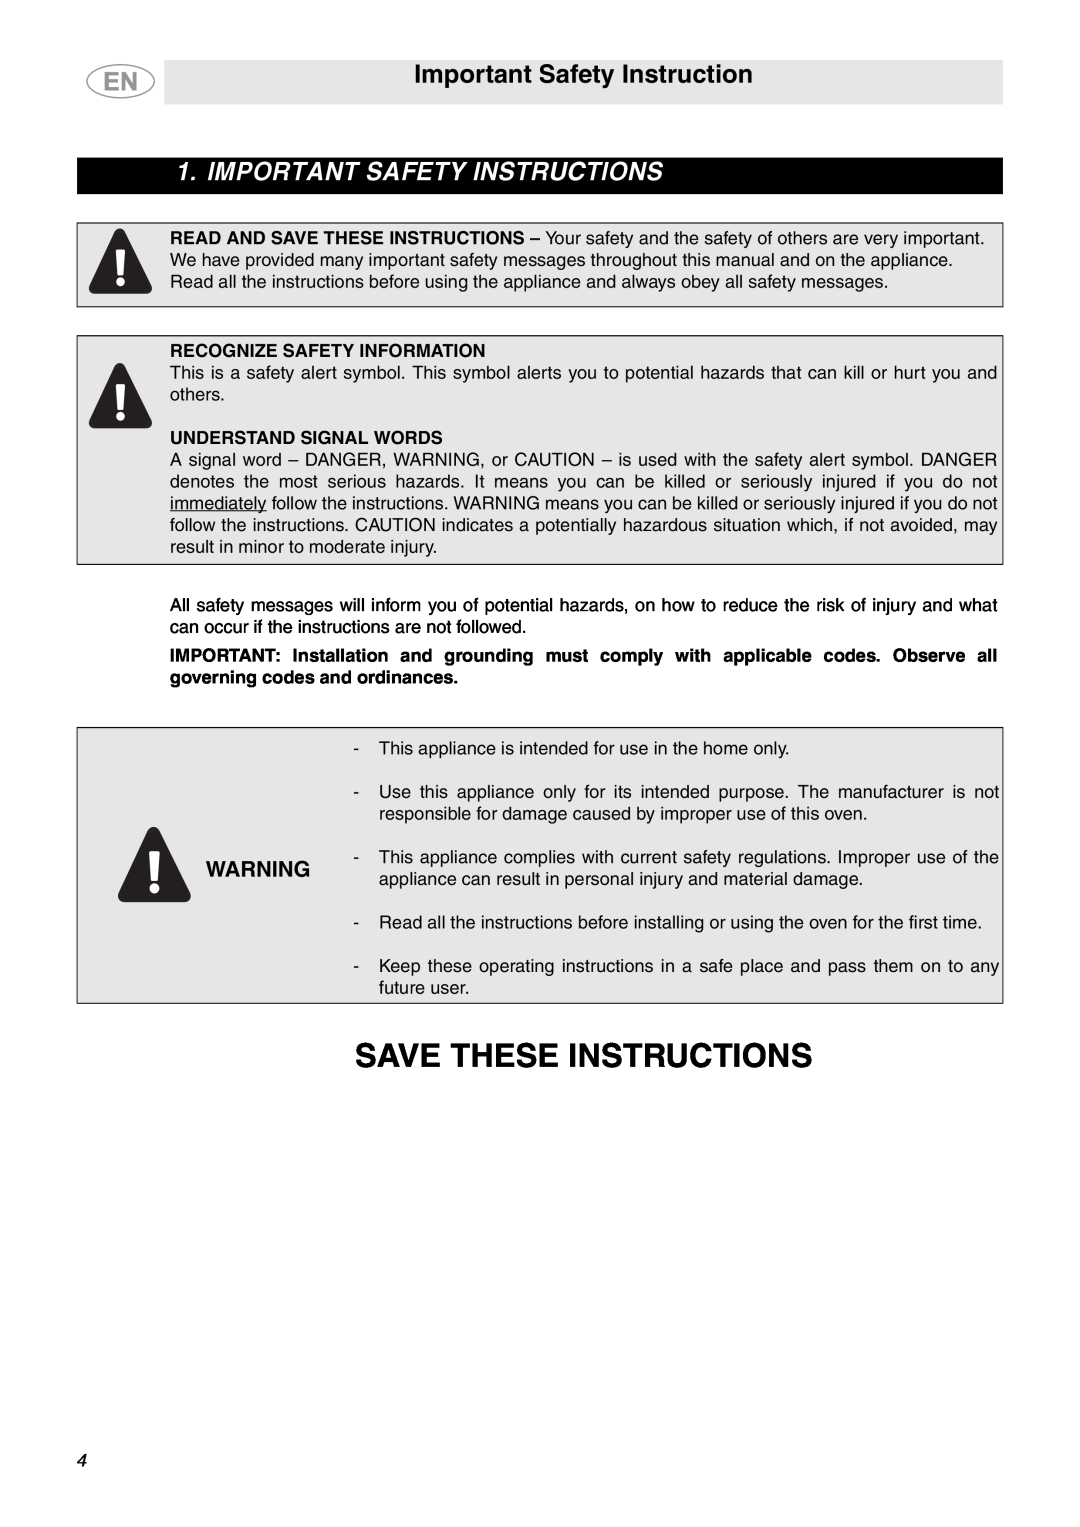 Smeg SC712U Important Safety Instruction, Recognize Safety Information, Understand Signal Words, Save These Instructions 